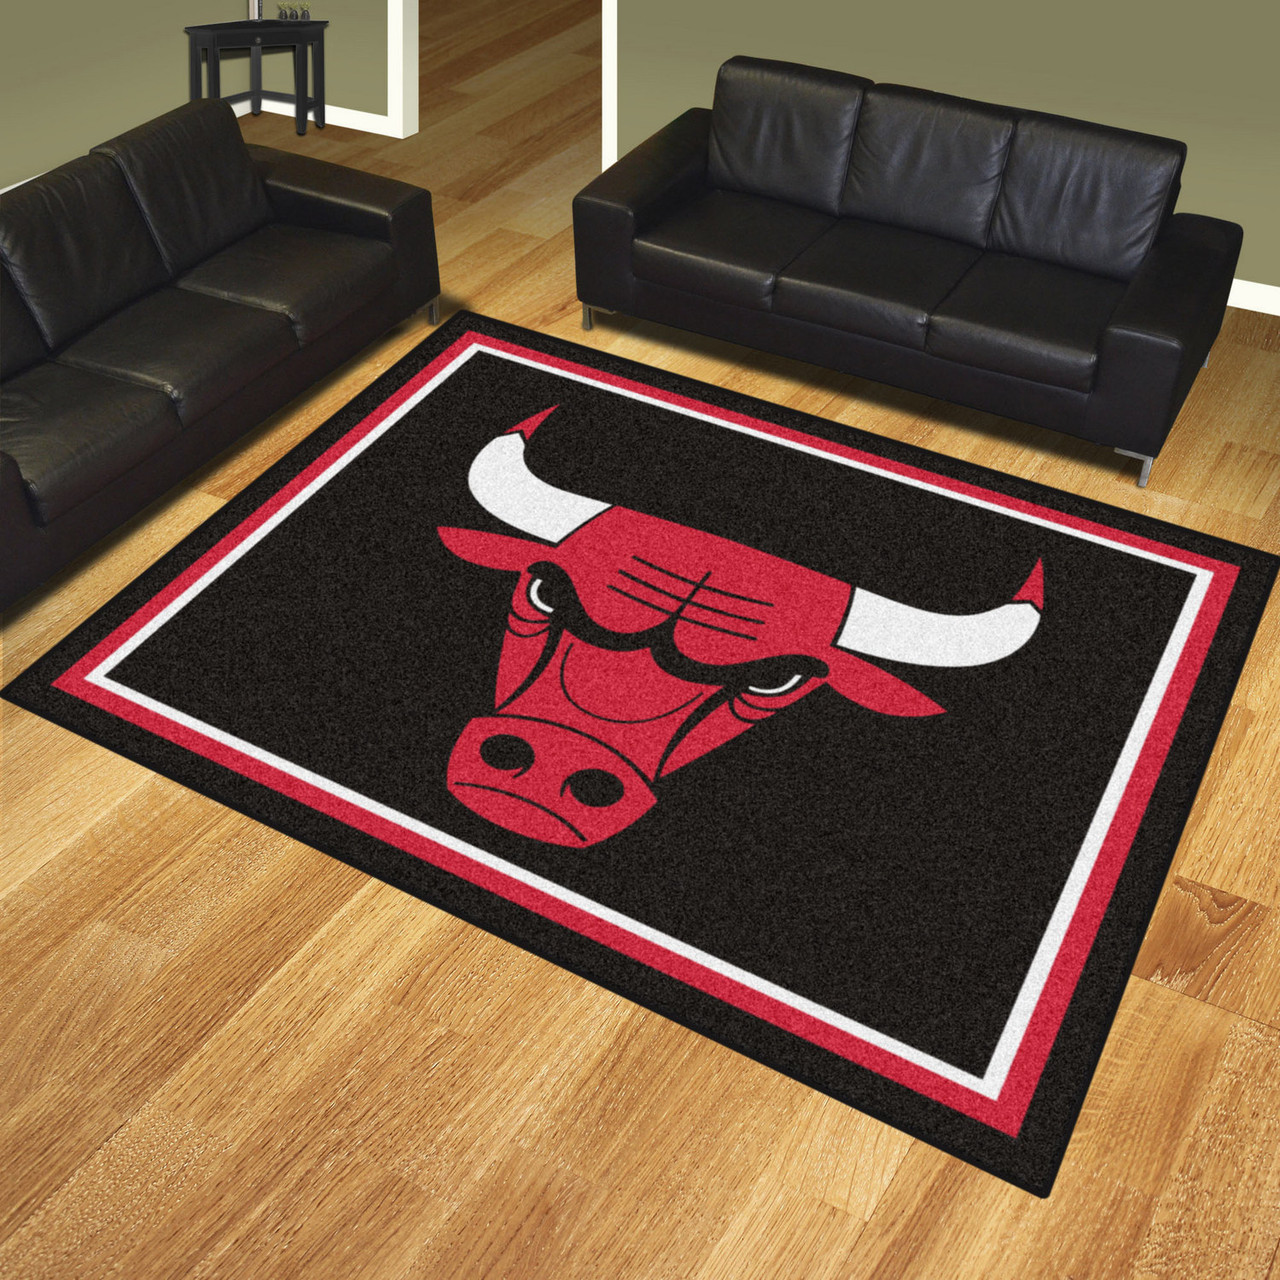 8' x 10' Chicago Bulls Red Rectangle Rug Floor Rug Area Rug NBA